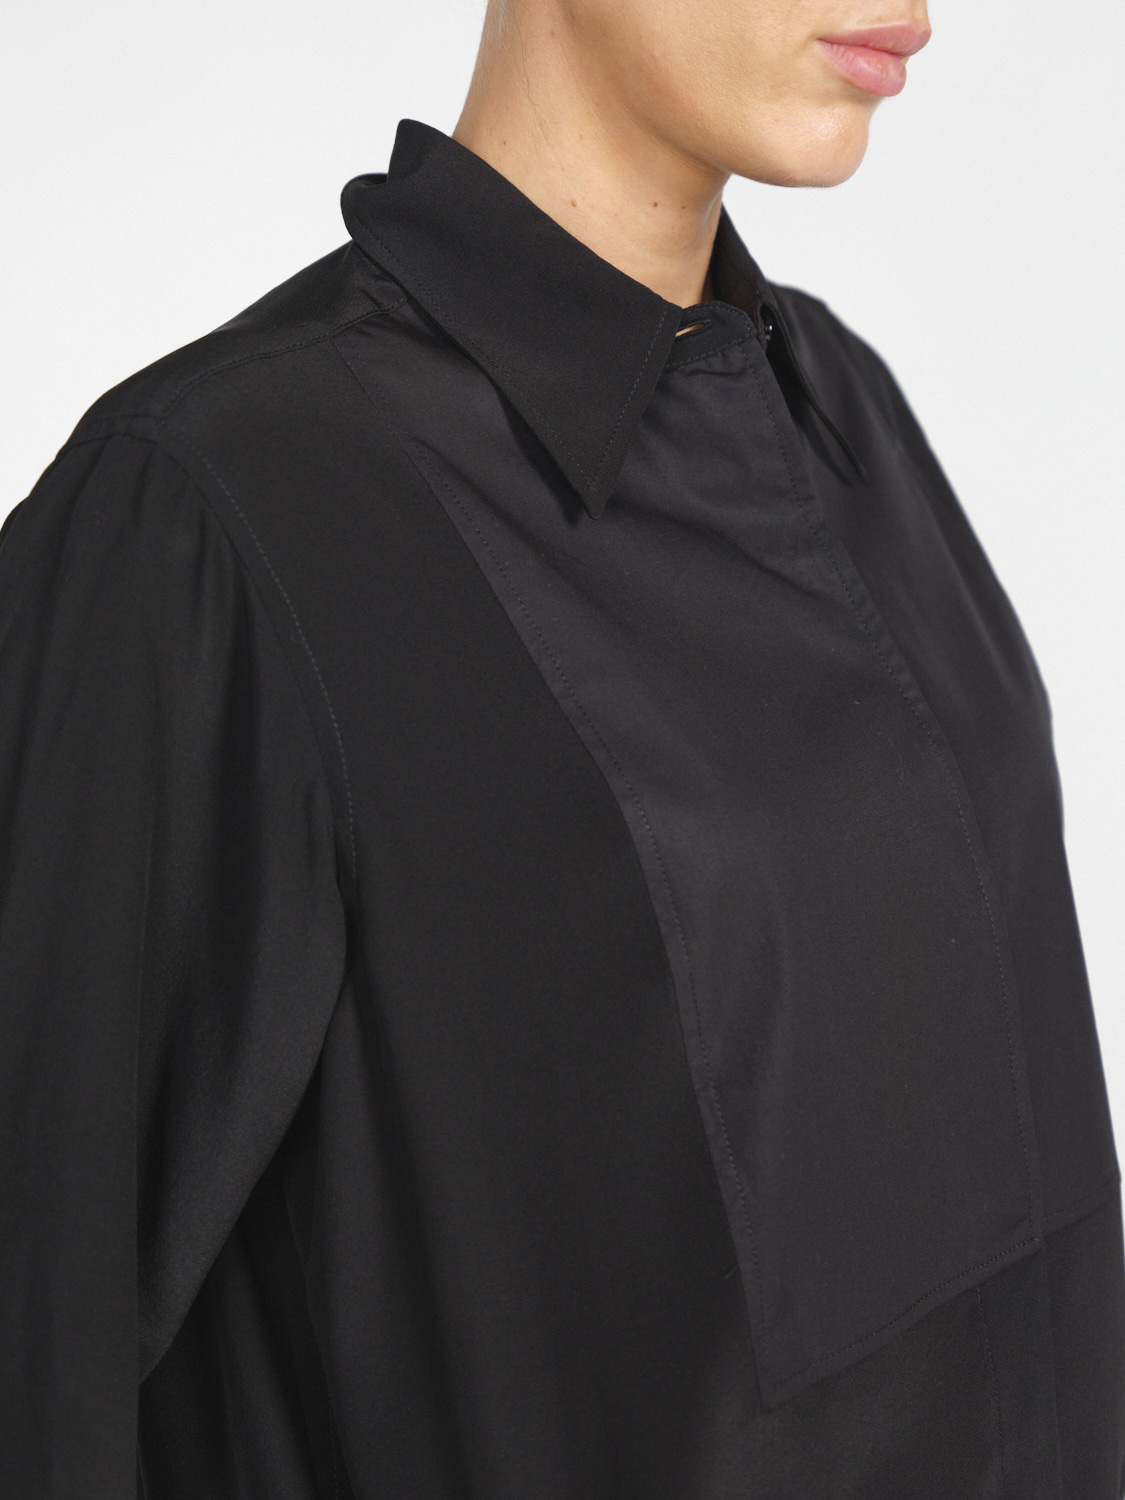 Victoria Beckham Classic blouse with a button placket  black 34